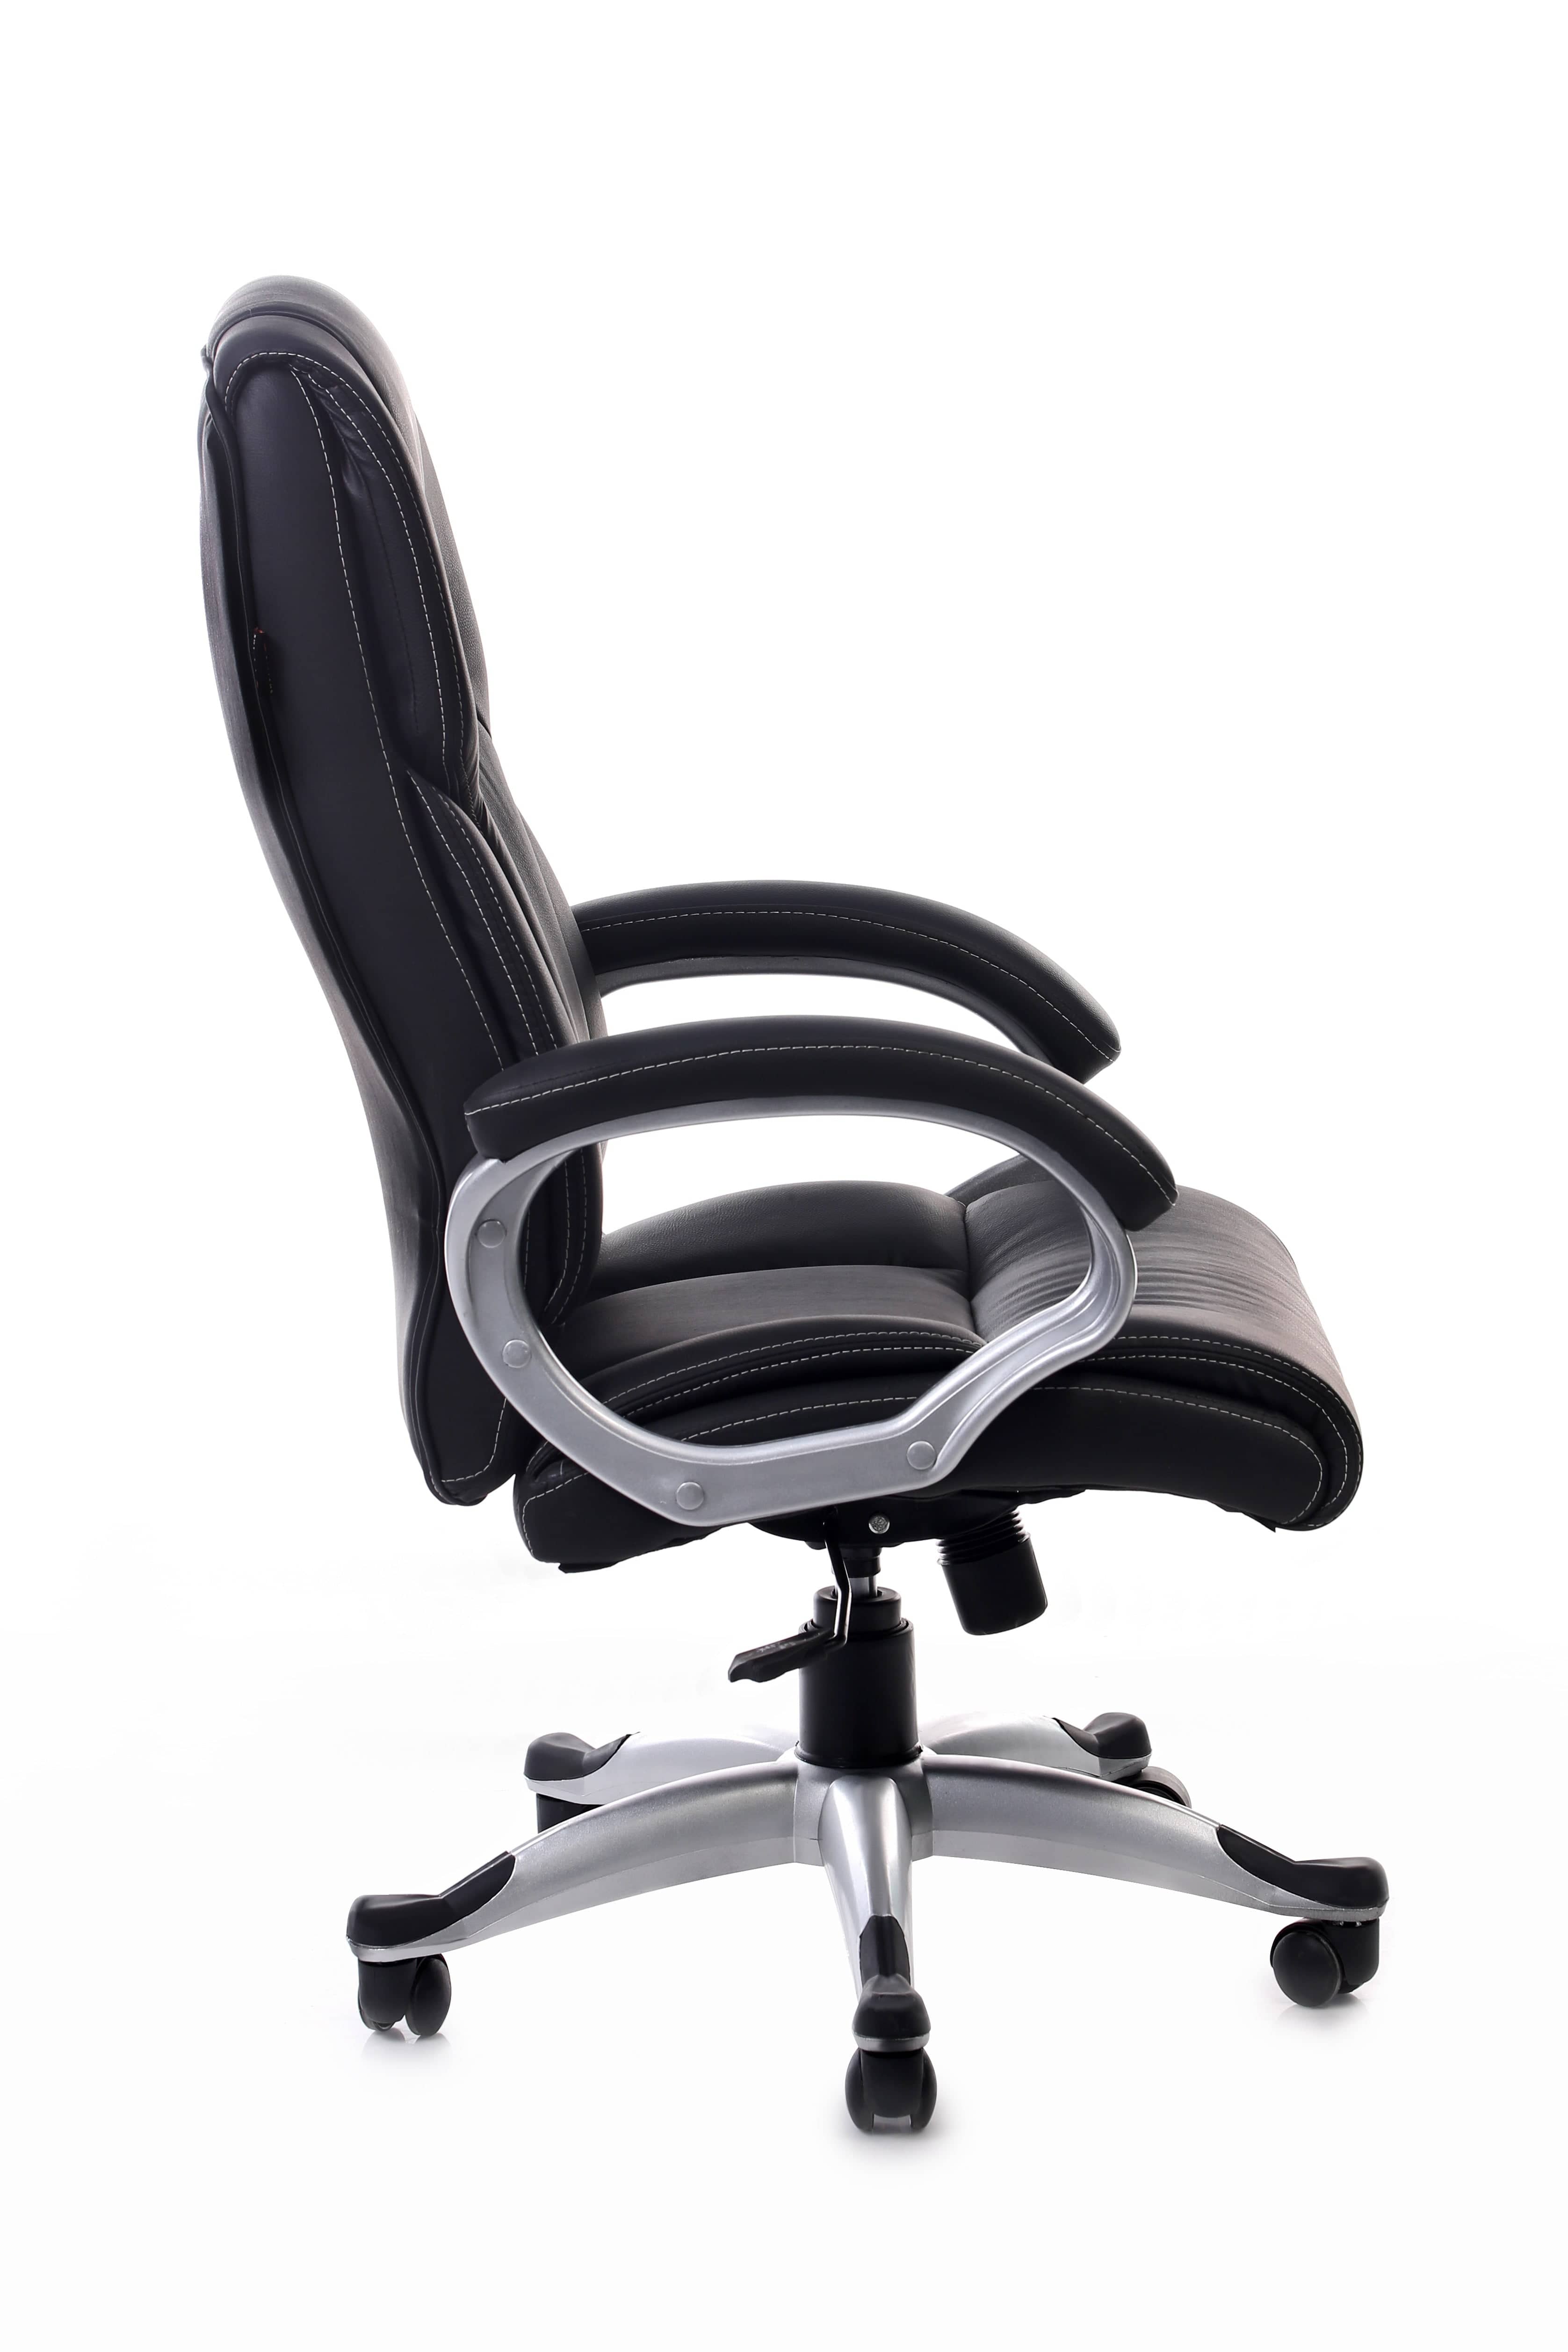 Adiko High Back Executive Revolving Office Chair in Black